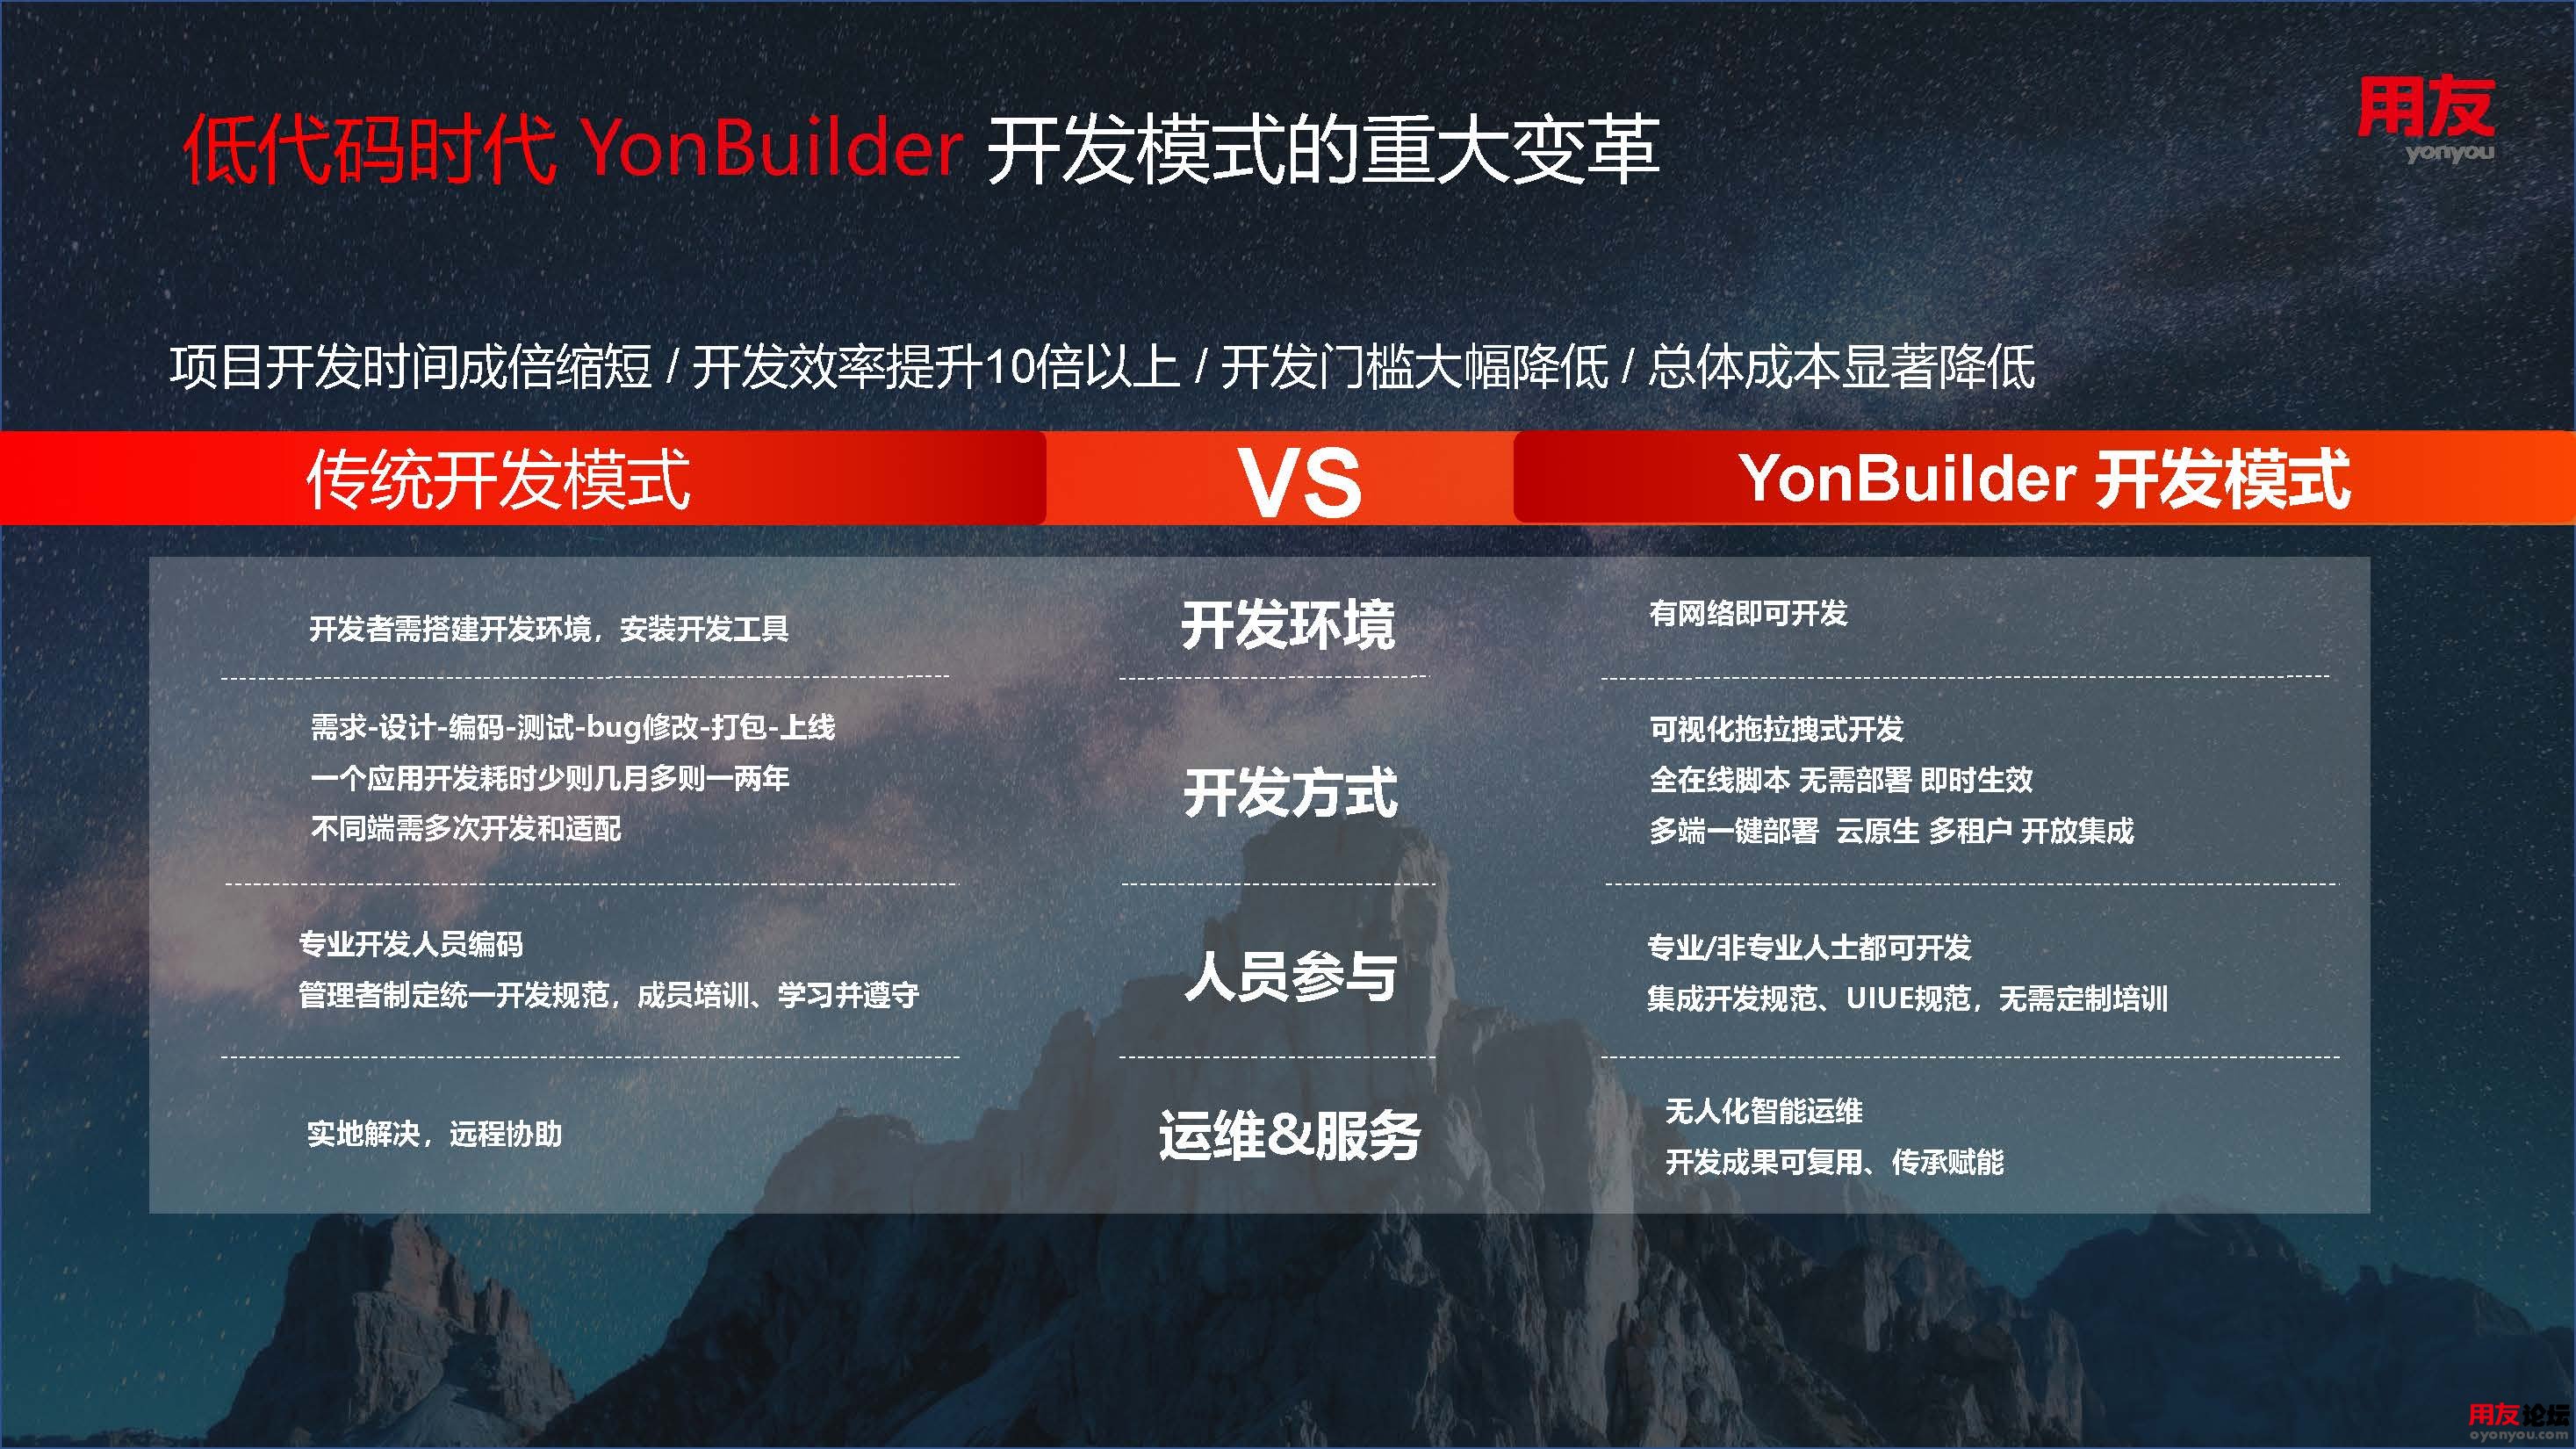 YonBuilder产品介绍2021版_页面_03.jpg